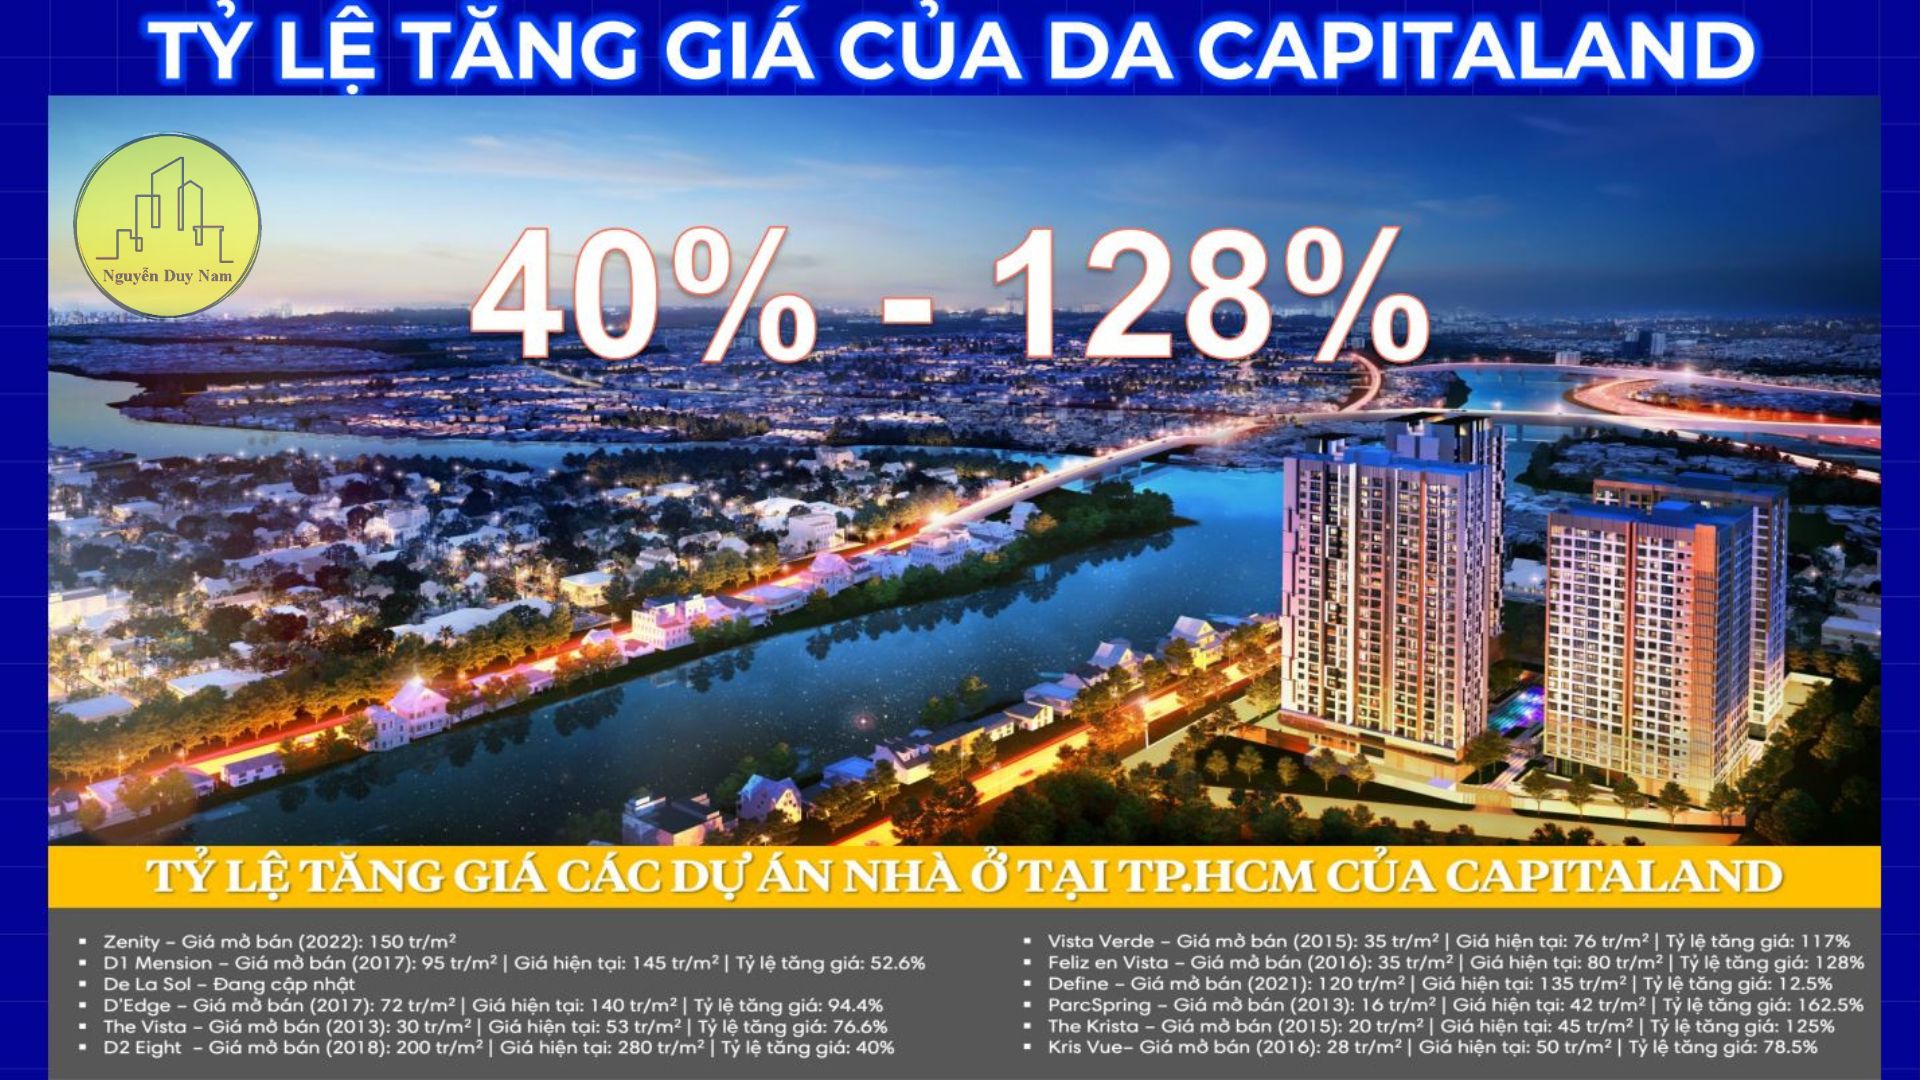 Tỉ lệ tăng giá của dự án Capitaland 